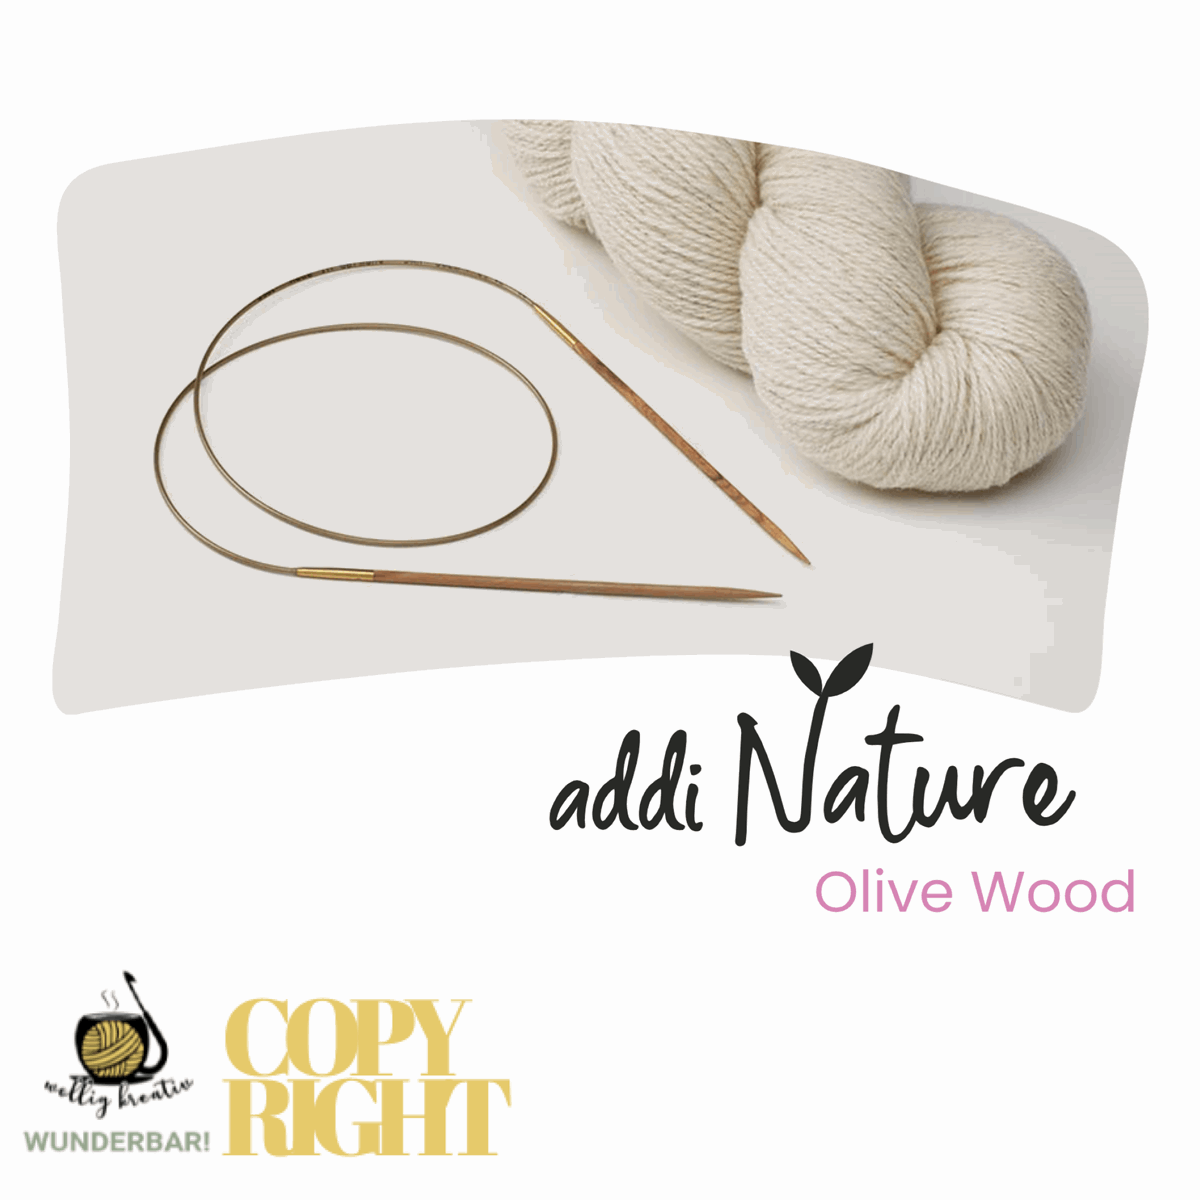 Addi, Nature Olive Wood Rundstricknadel, 65757, Größe 10, Länge 100